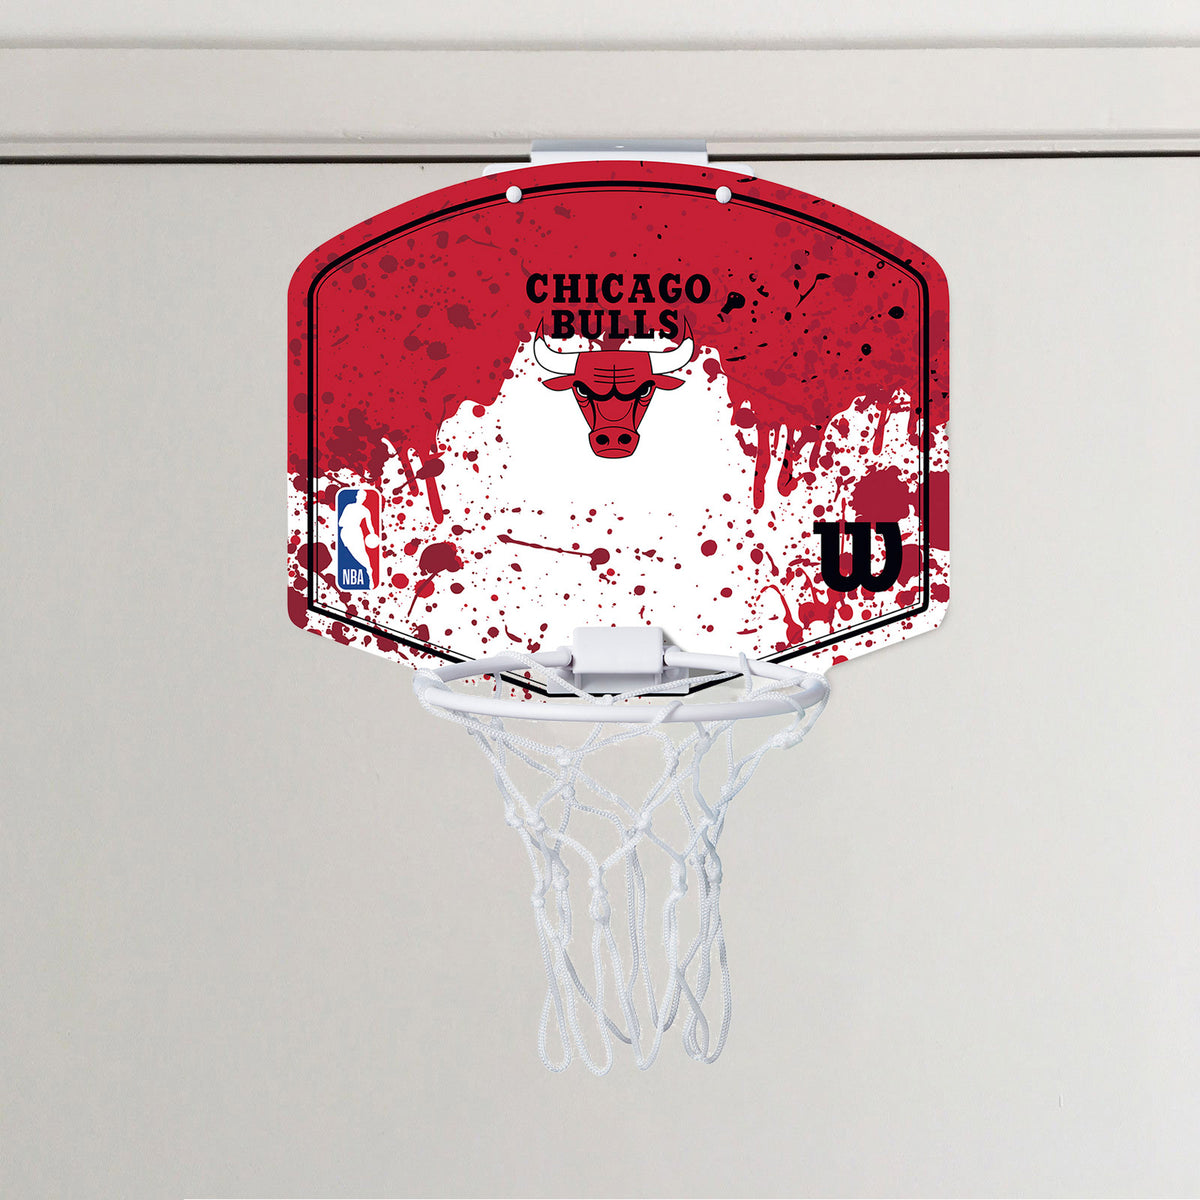 Chicago Bulls NBA Team Mini Hoop